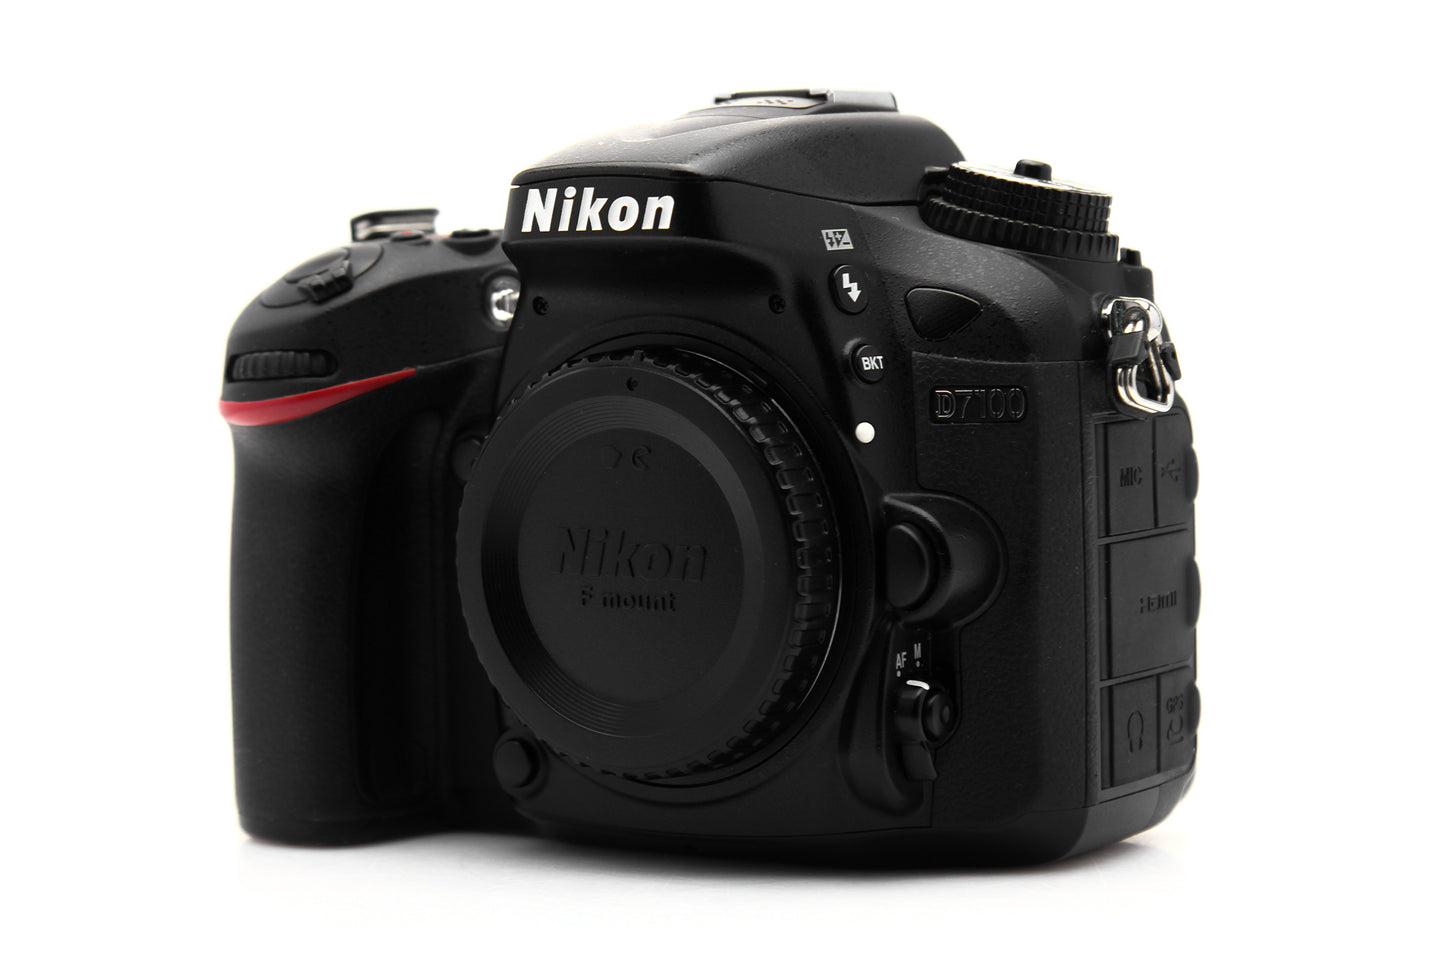 Used Nikon D7100 24.1 MP Camera Body